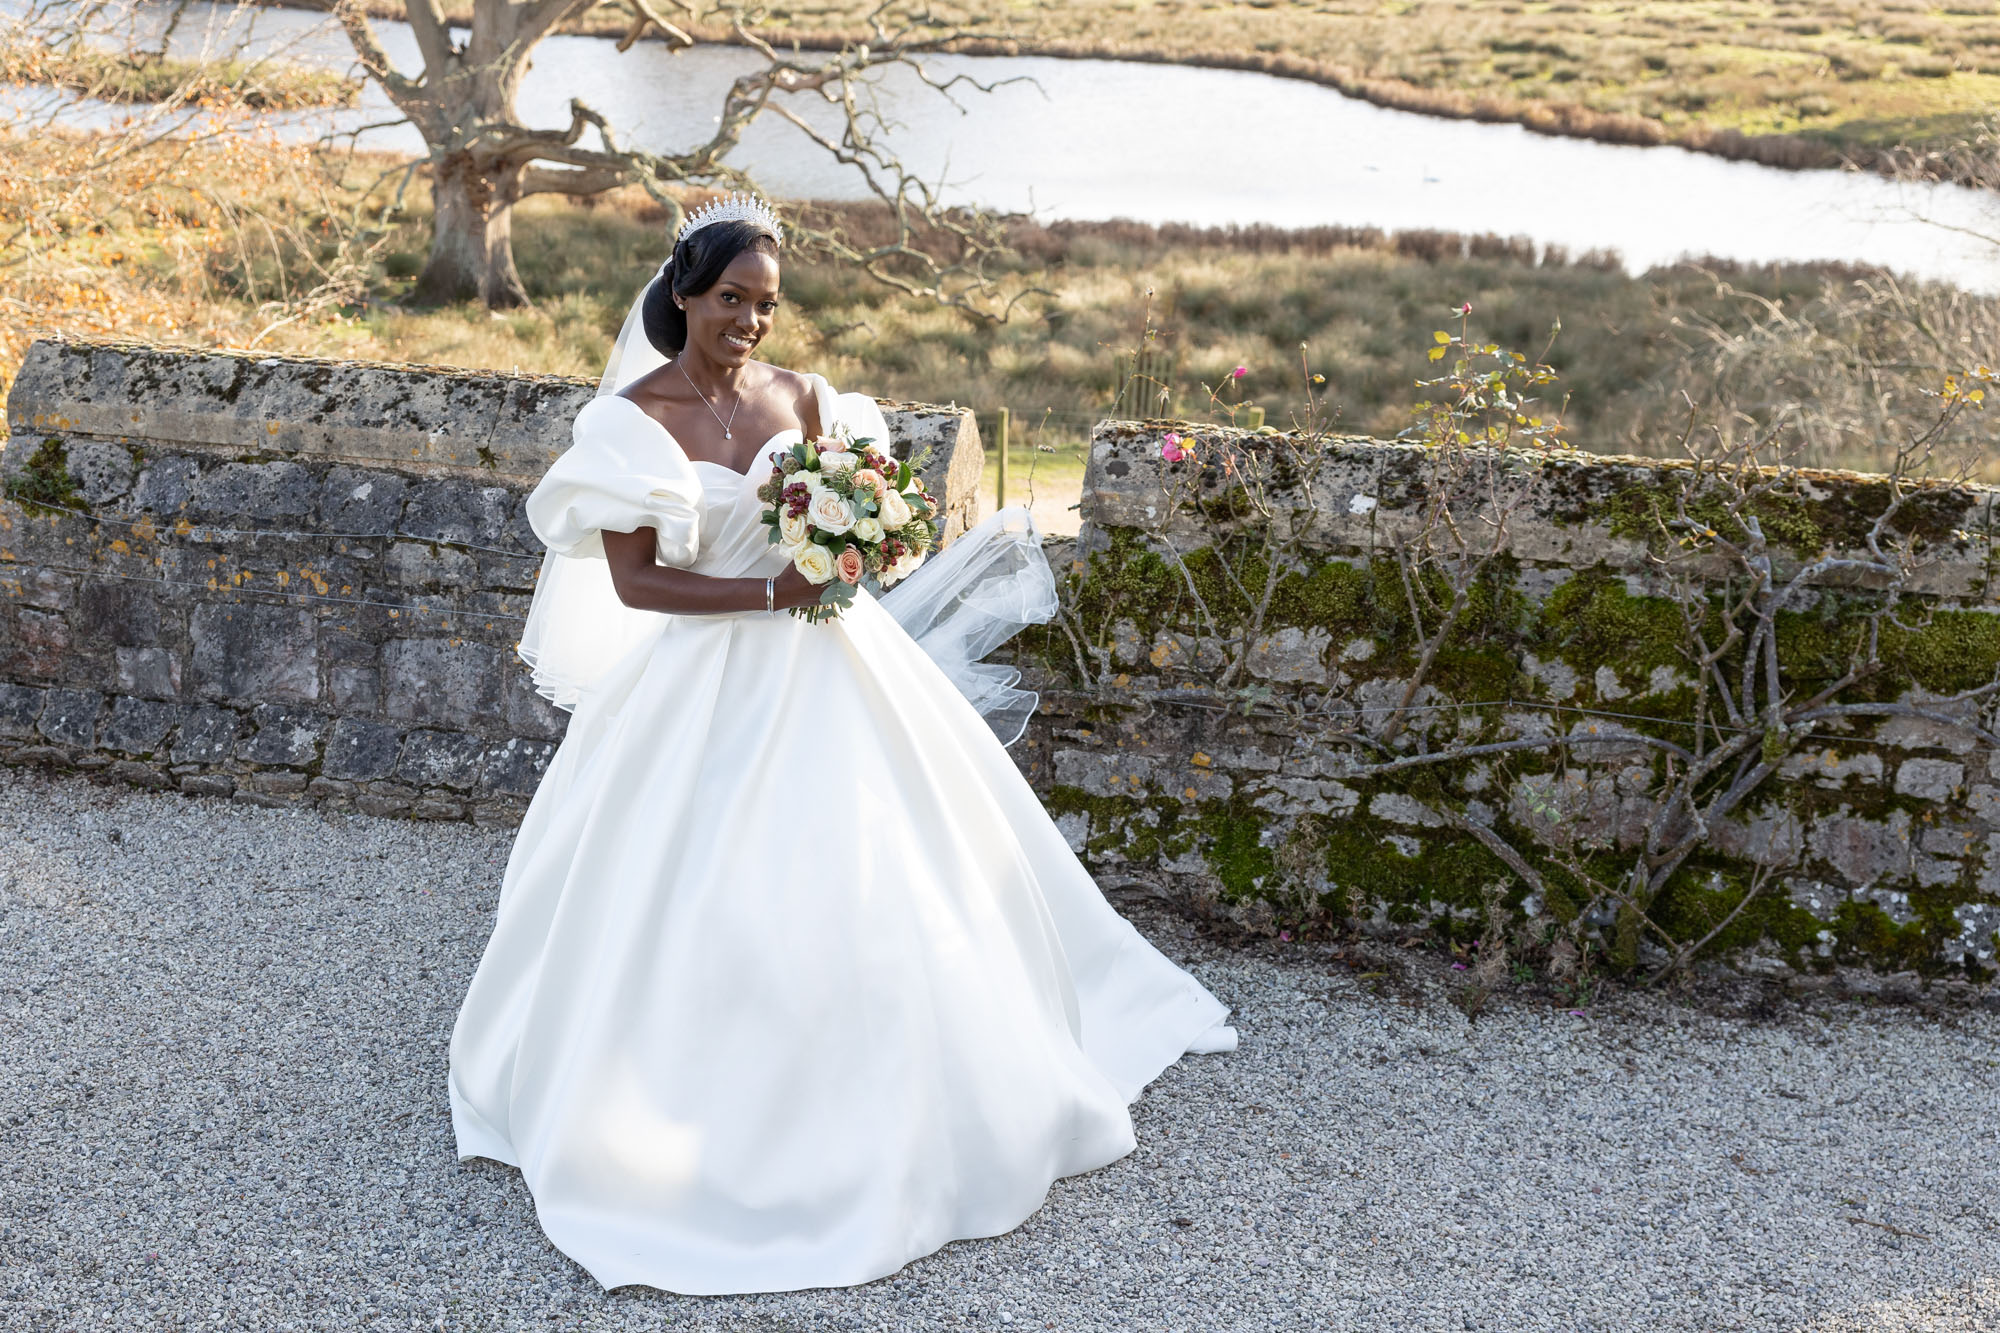 Powderham castle wedding photography by Evolve Devon wedding photographers